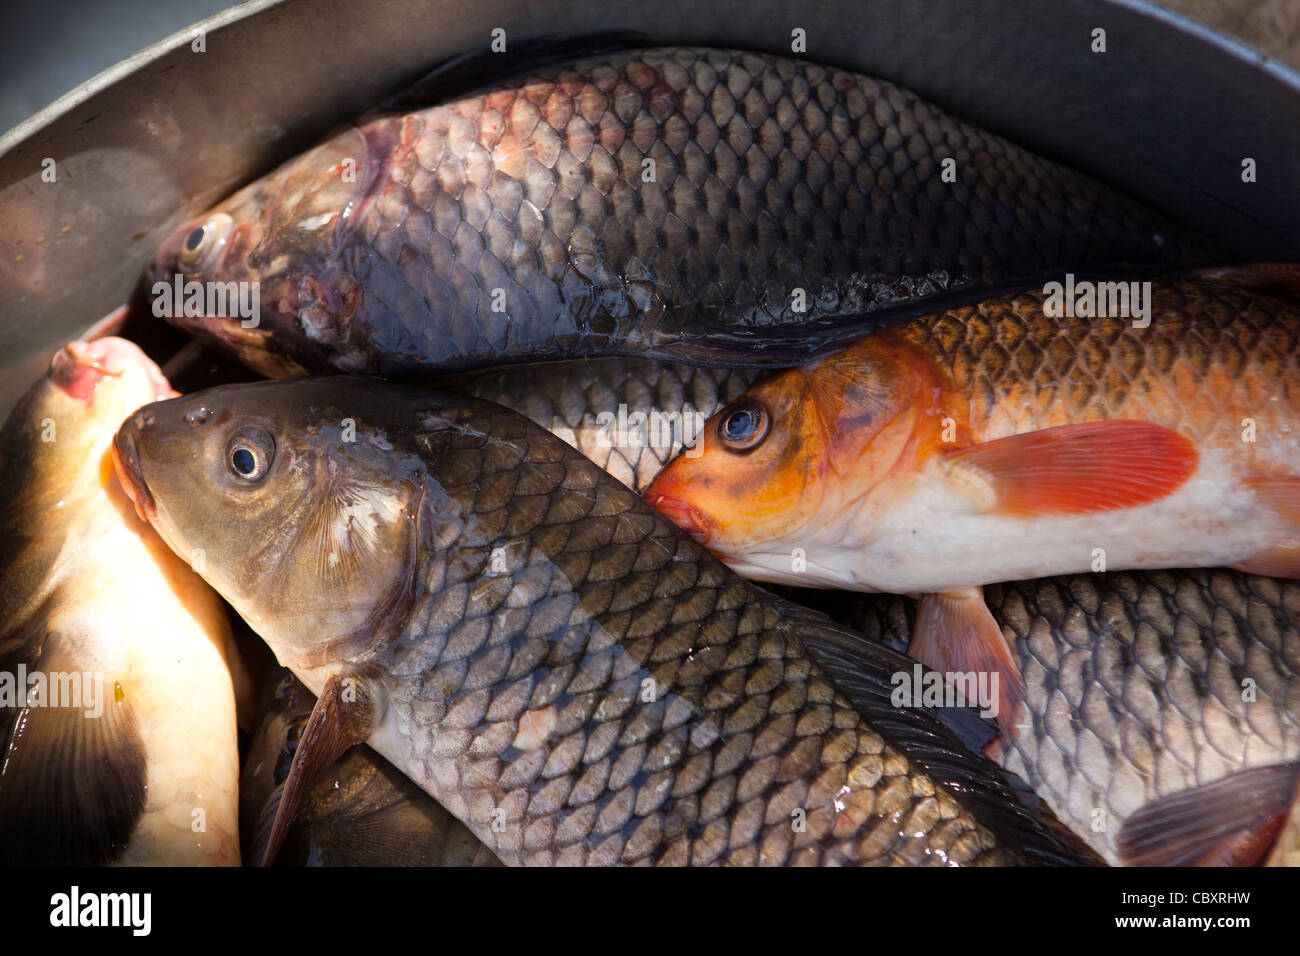 India, Manipur, Imphal, Loktak Lake, Sendra Island freshly caught kamalcalp (Grass Carp) fish waiting to go to market Stock Photo